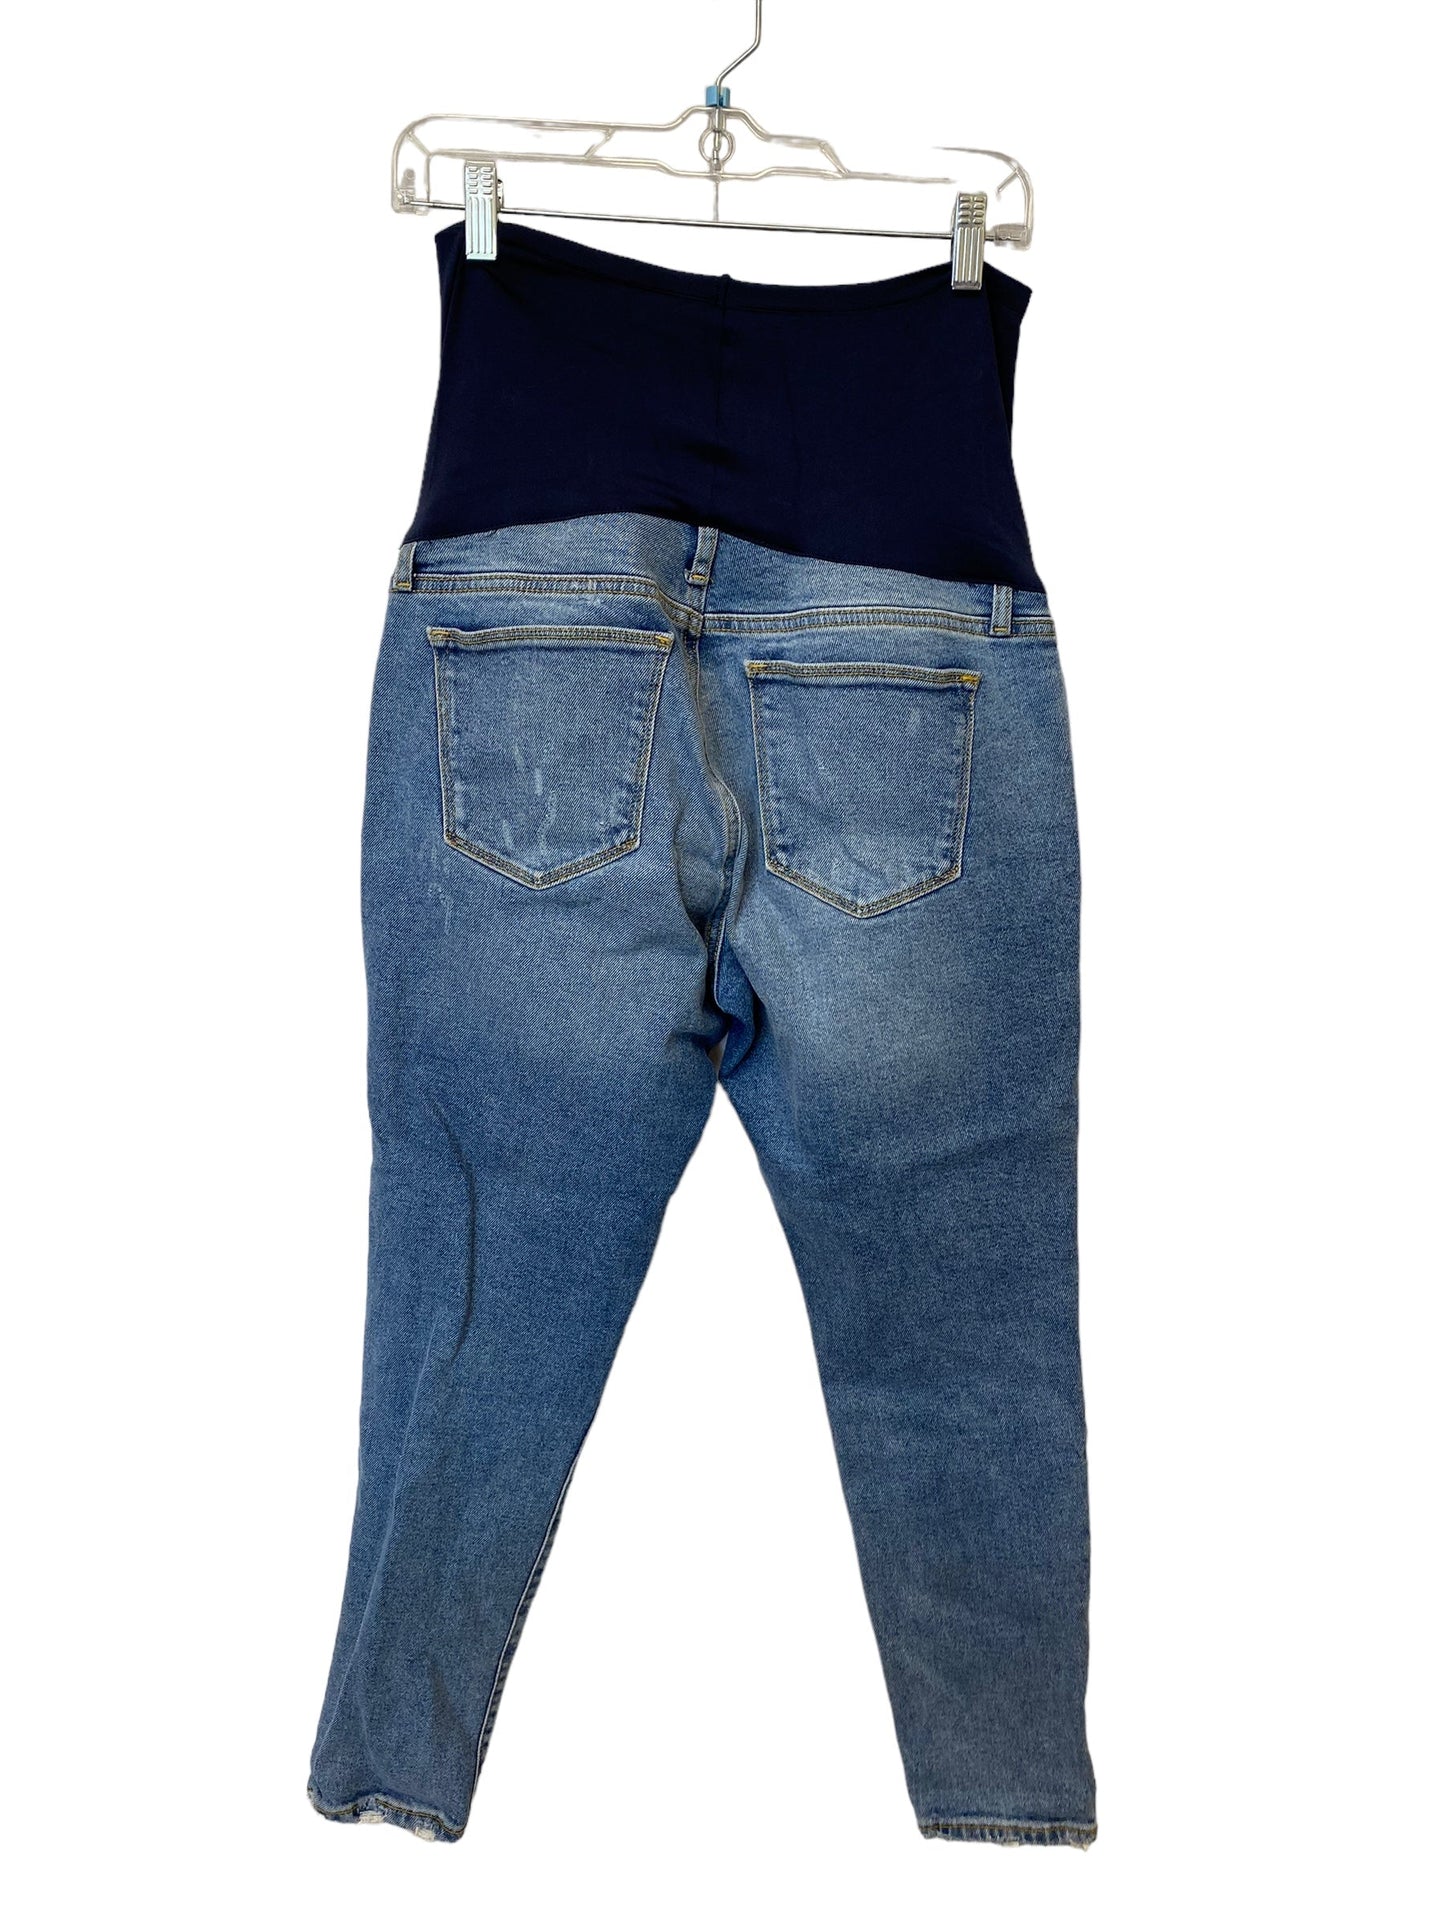 Maternity Jeans By Gap  Size: 8